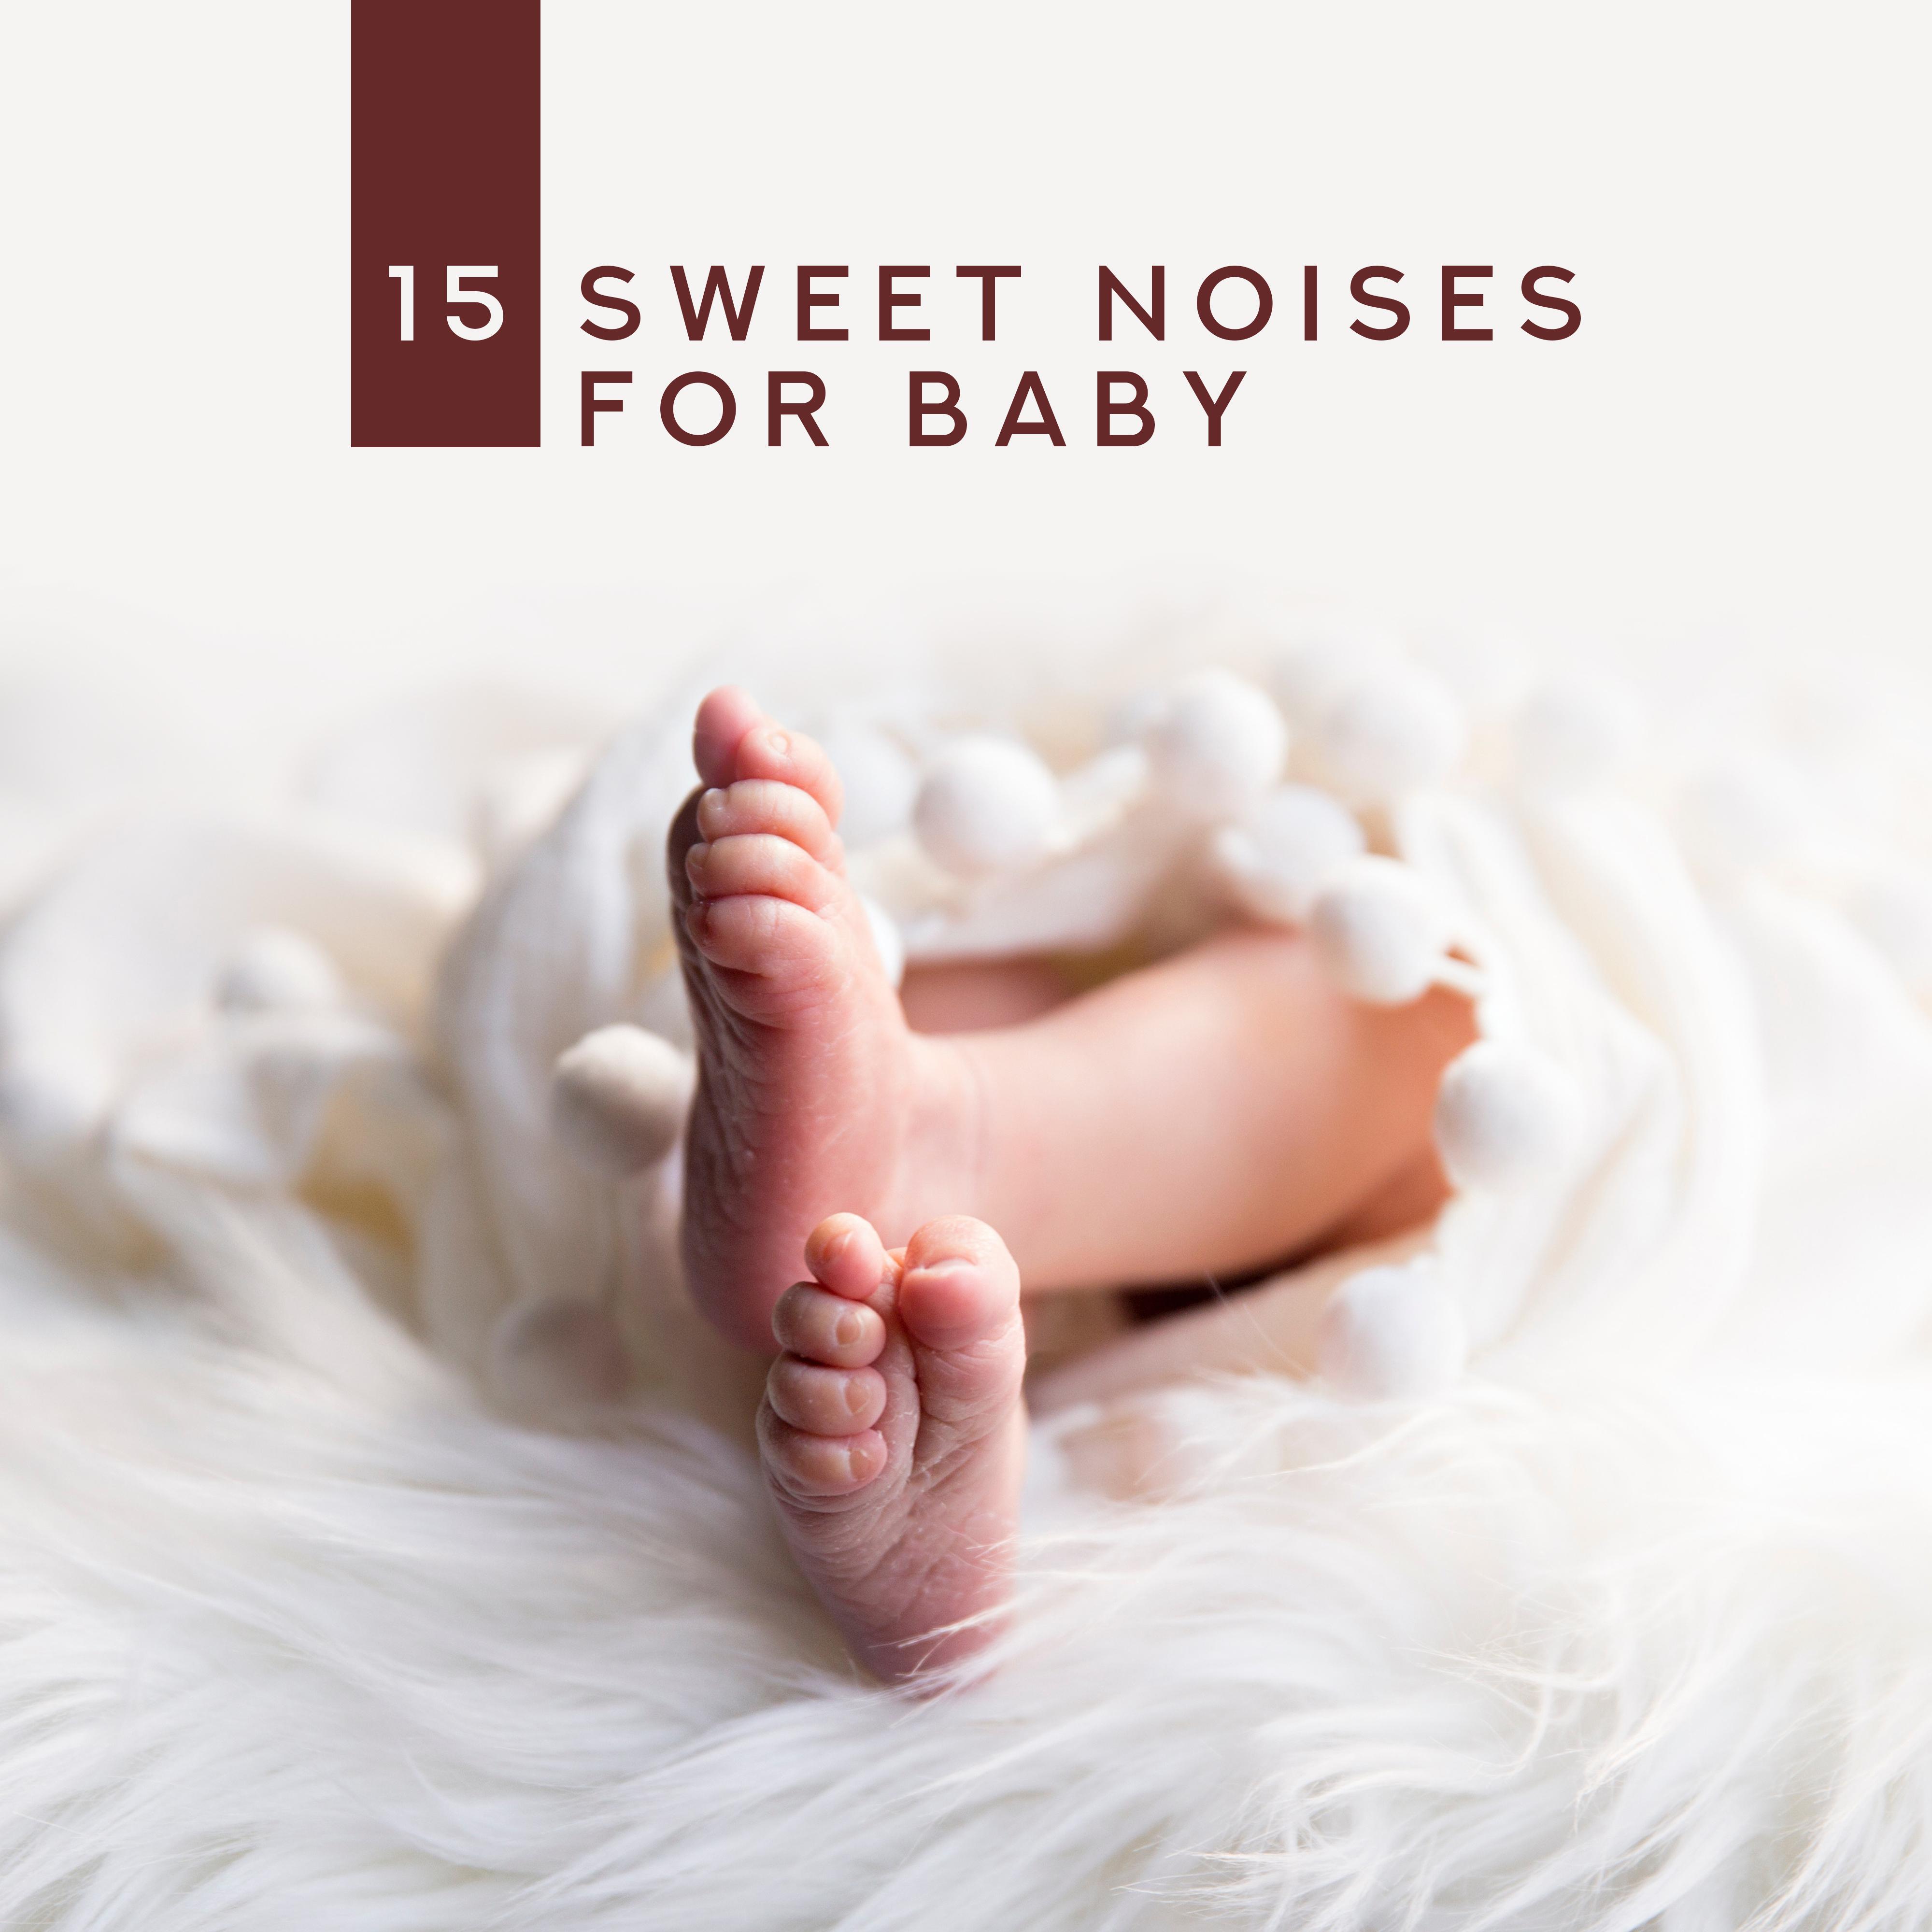 15 Sweet Noises for Baby  Deeper Sleep, Calm Down, Healing Music for Kids, Baby Lullabies, Toddler Music, Calm Sleep